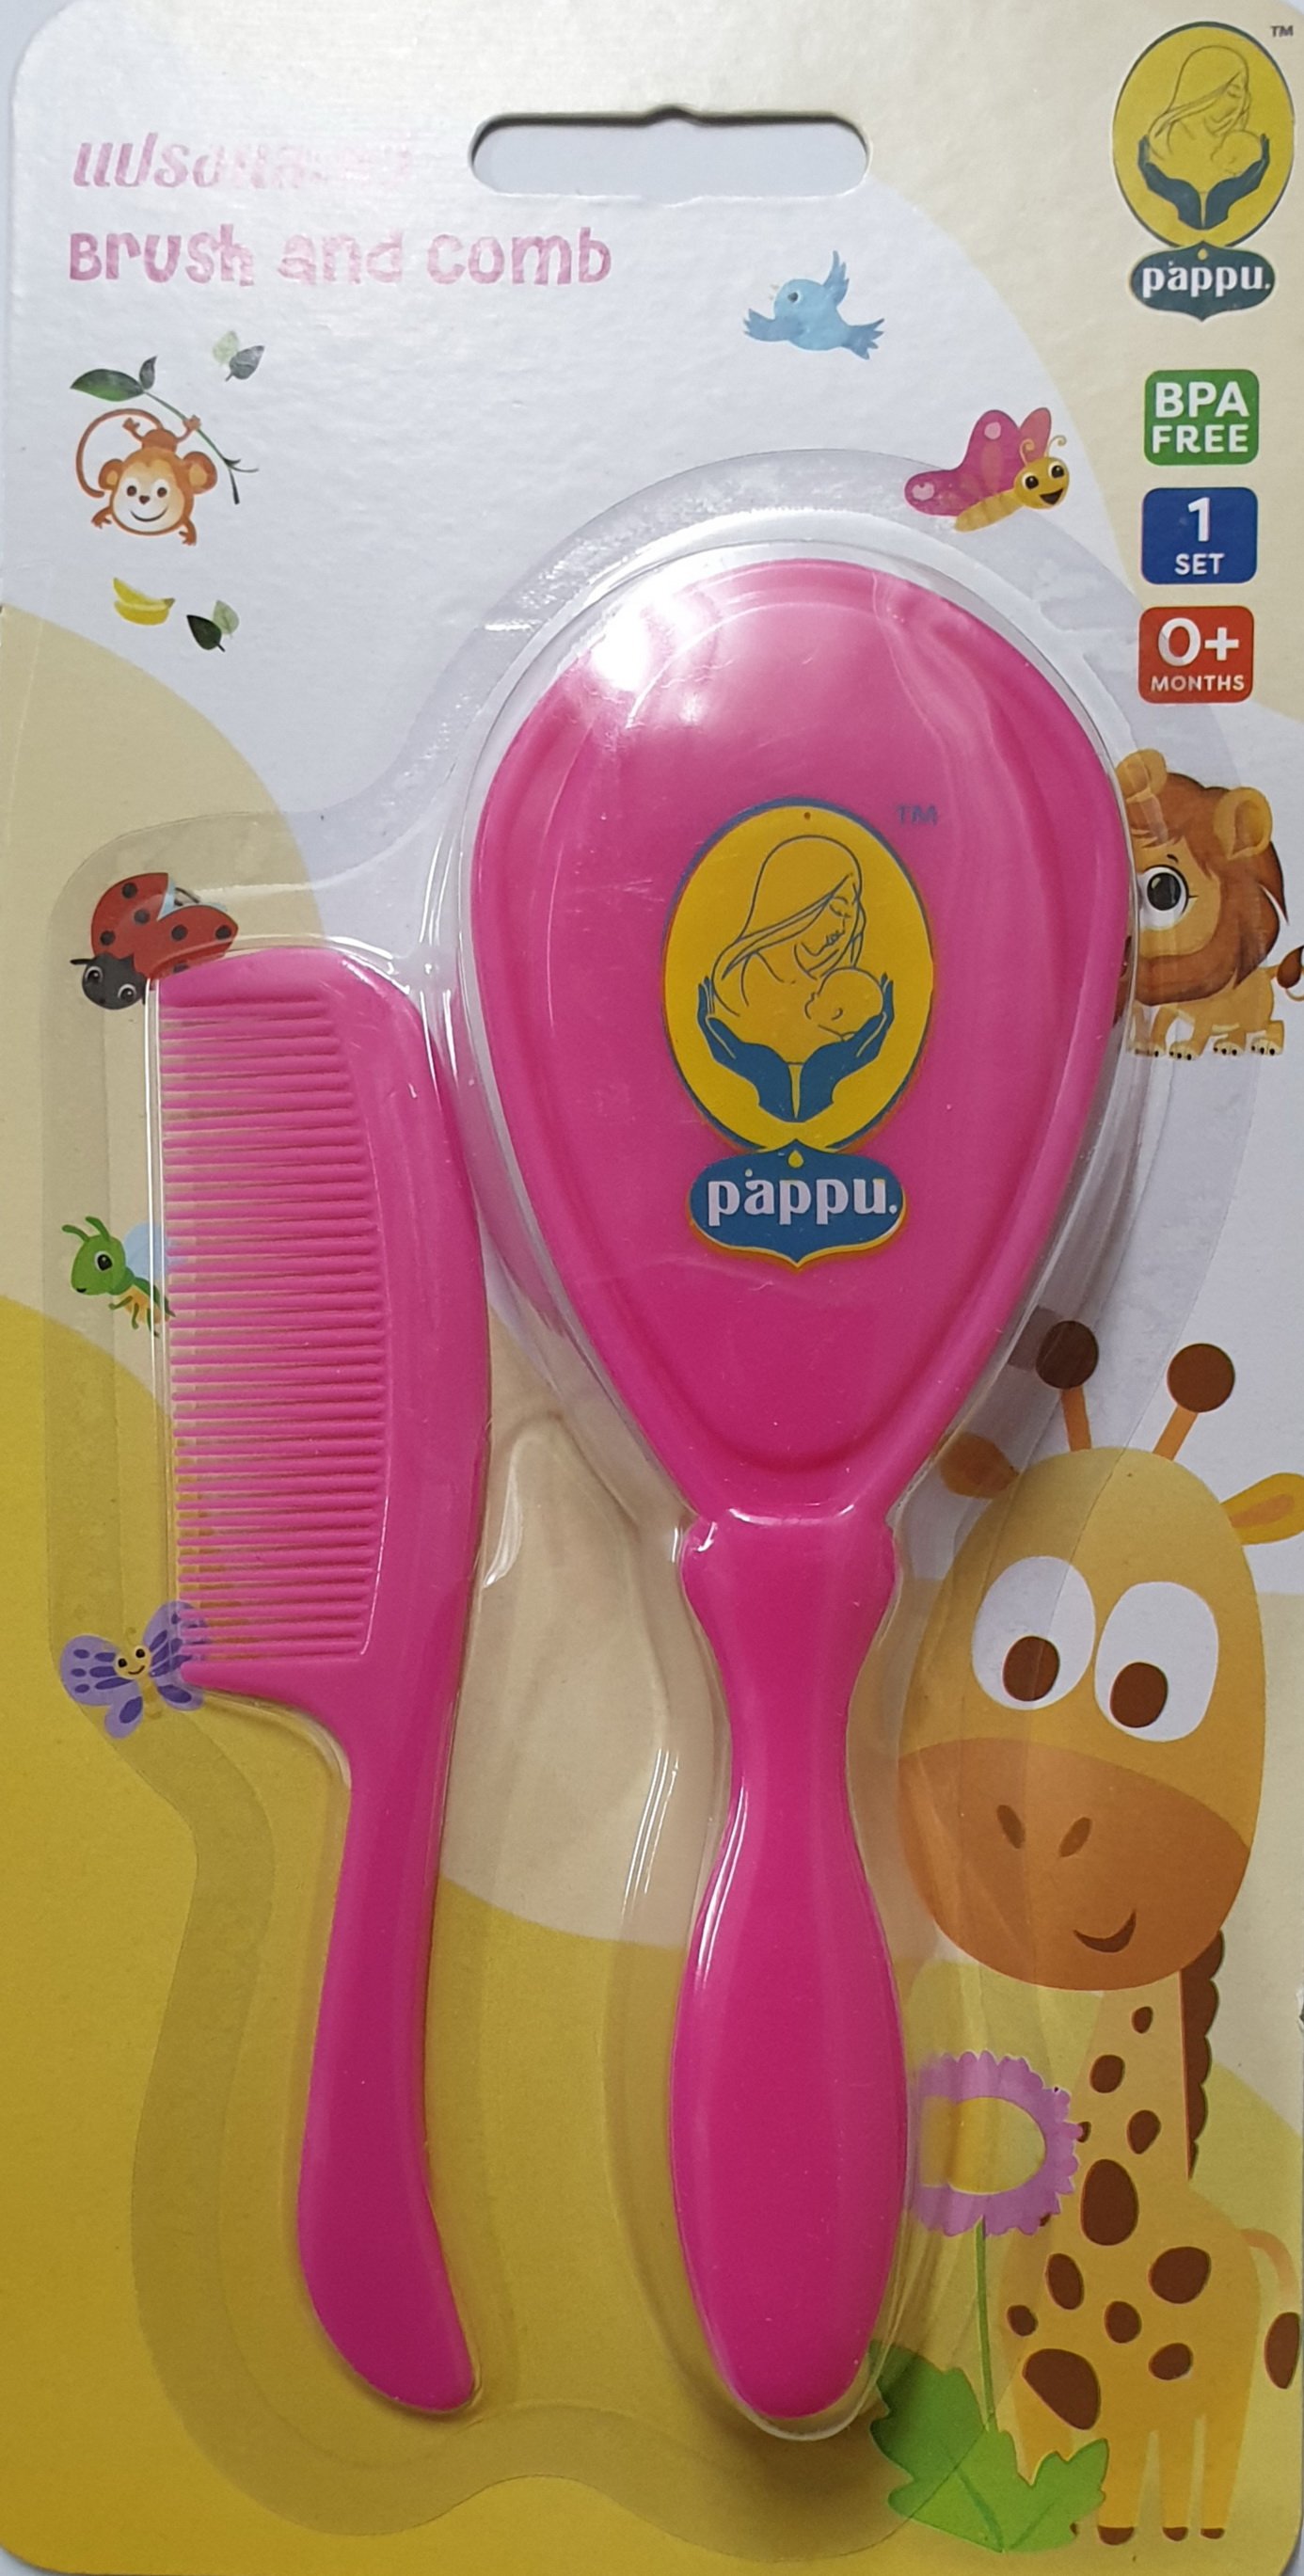 Pappu Brush & comb